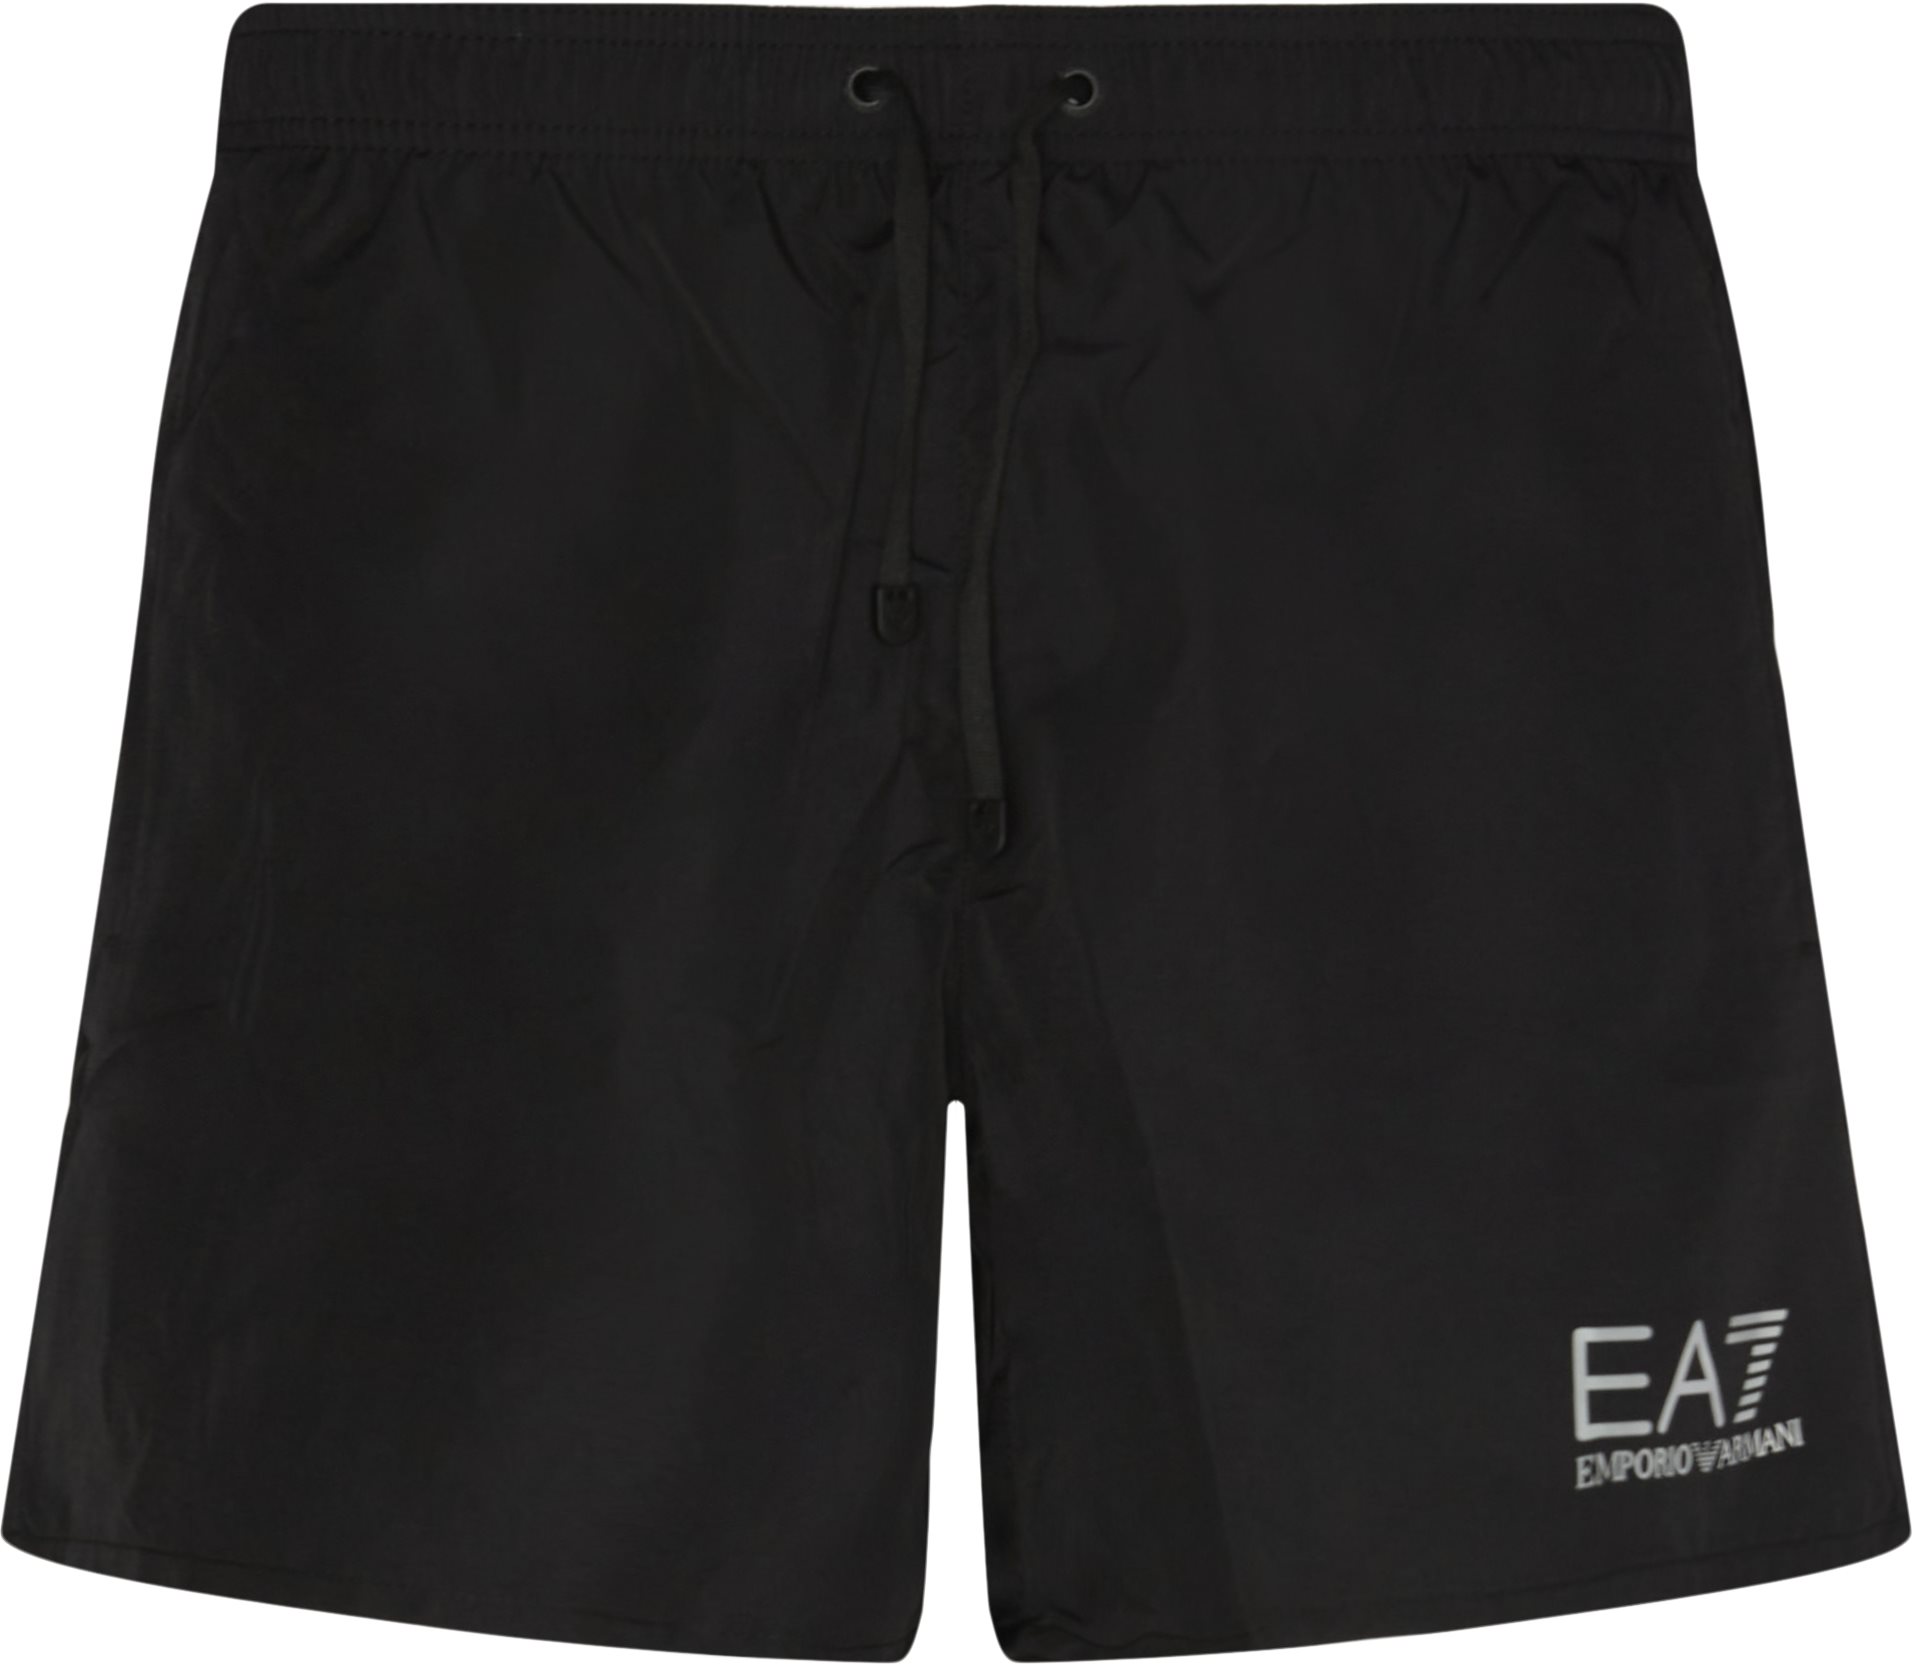 CC721 902000 Swim shorts - Shorts - Regular fit - Black